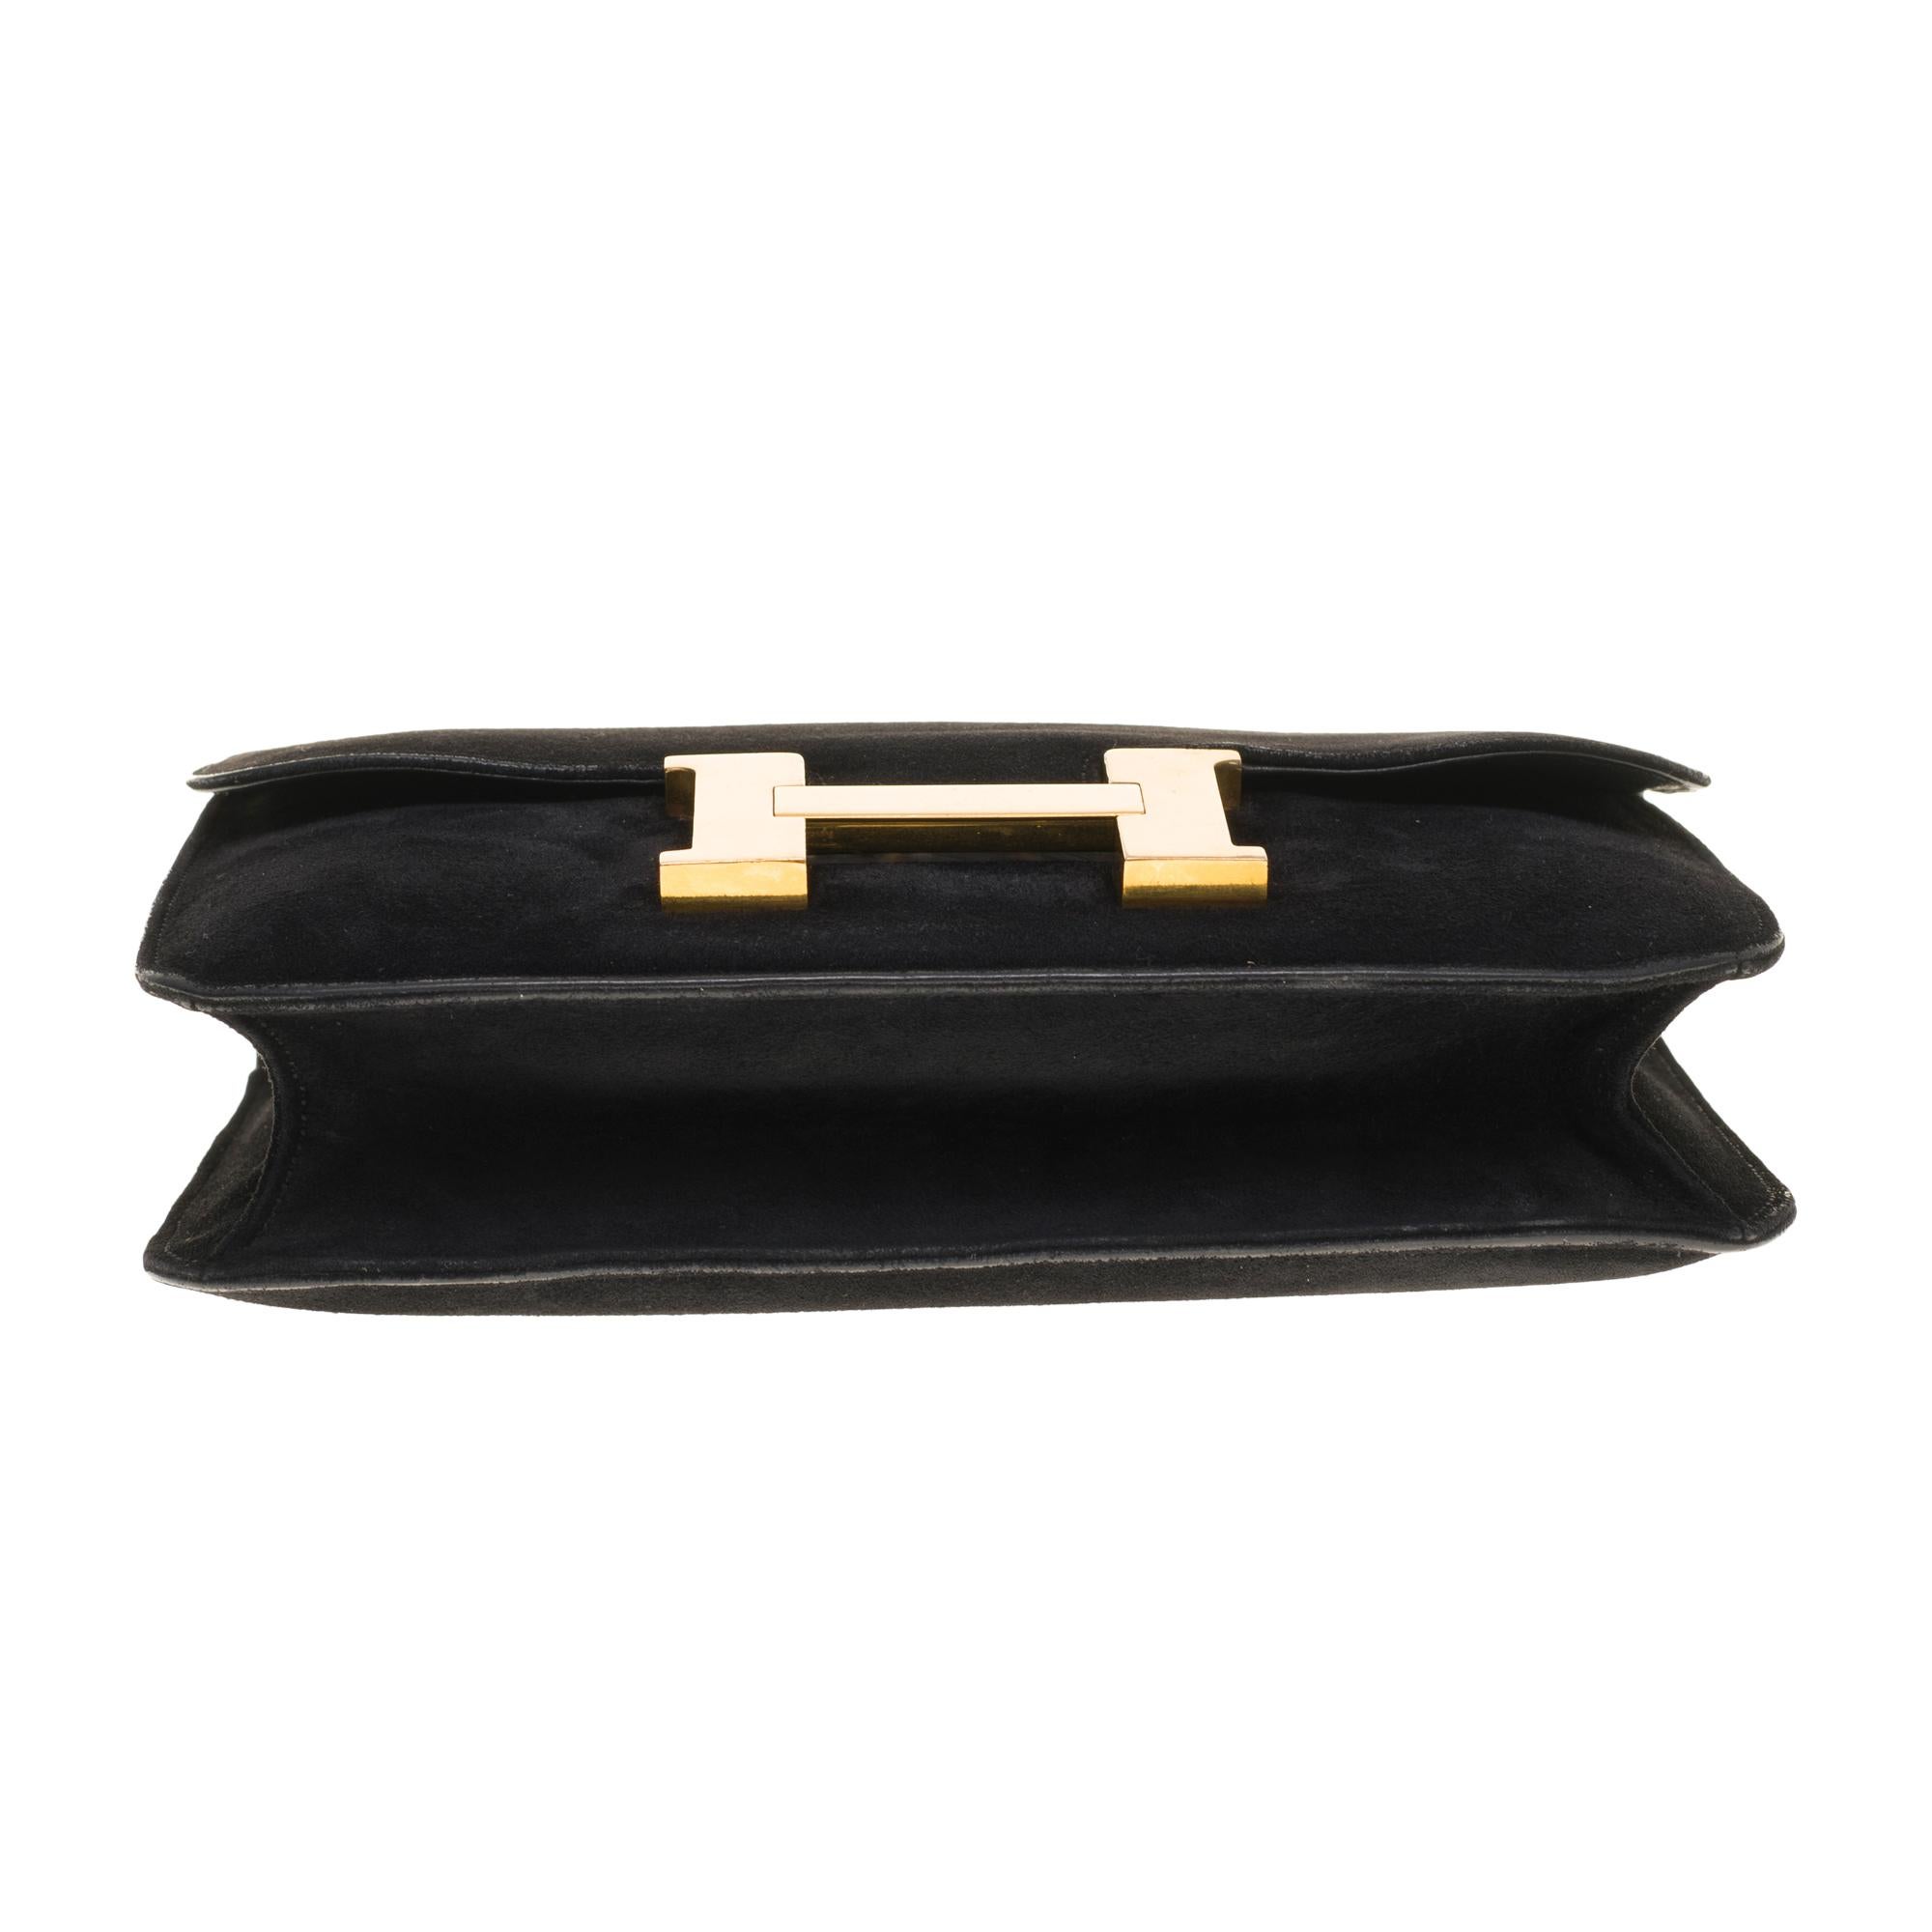 VERY RARE Hermes Constance 23 shoulder bag in black suede and gold hardware! 2